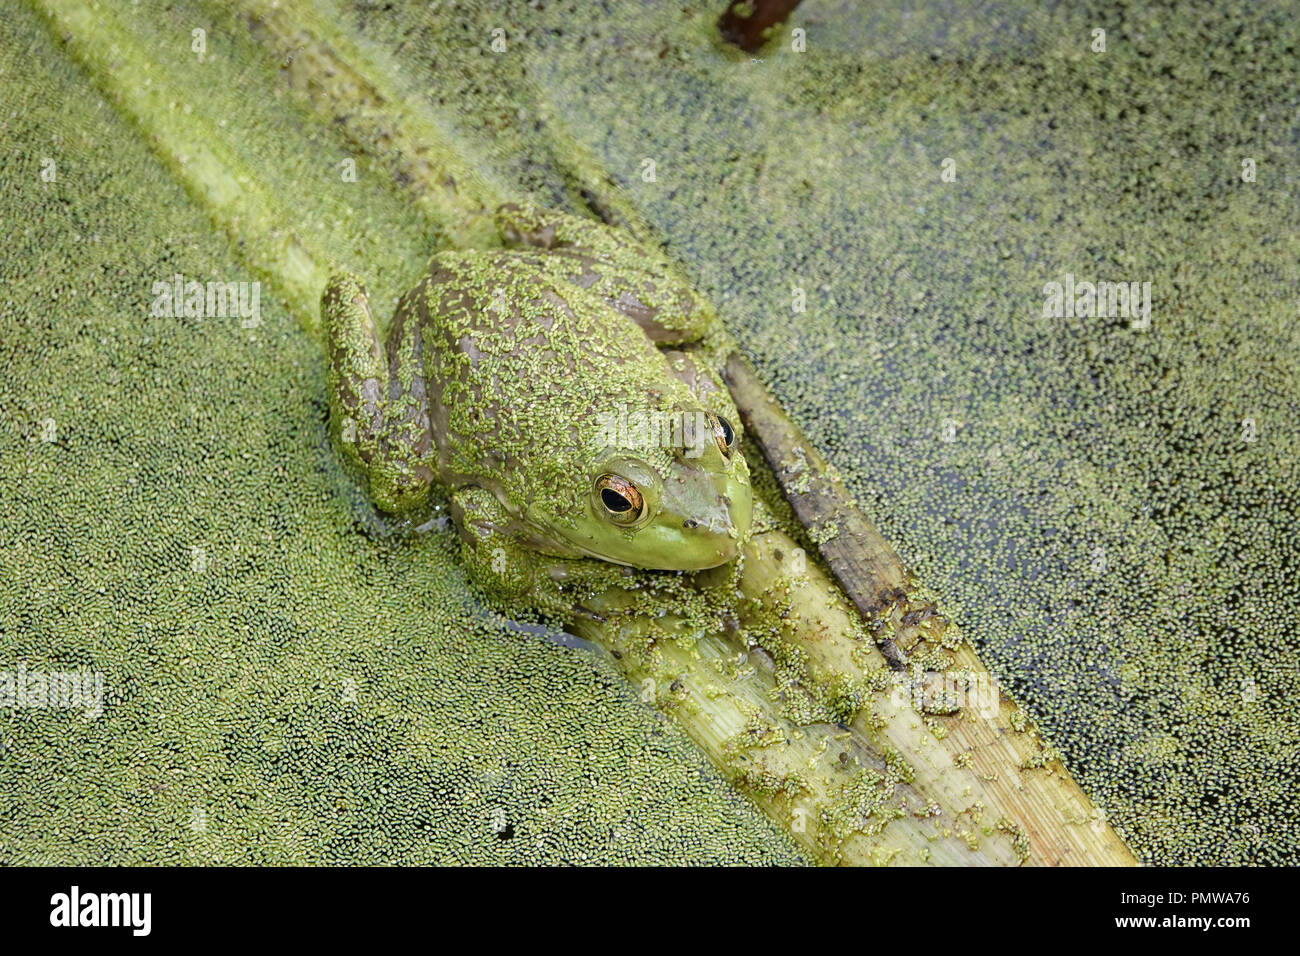 Duckweed-covered American bullfrog (Rana catesbeiana) in a pond Stock Photo